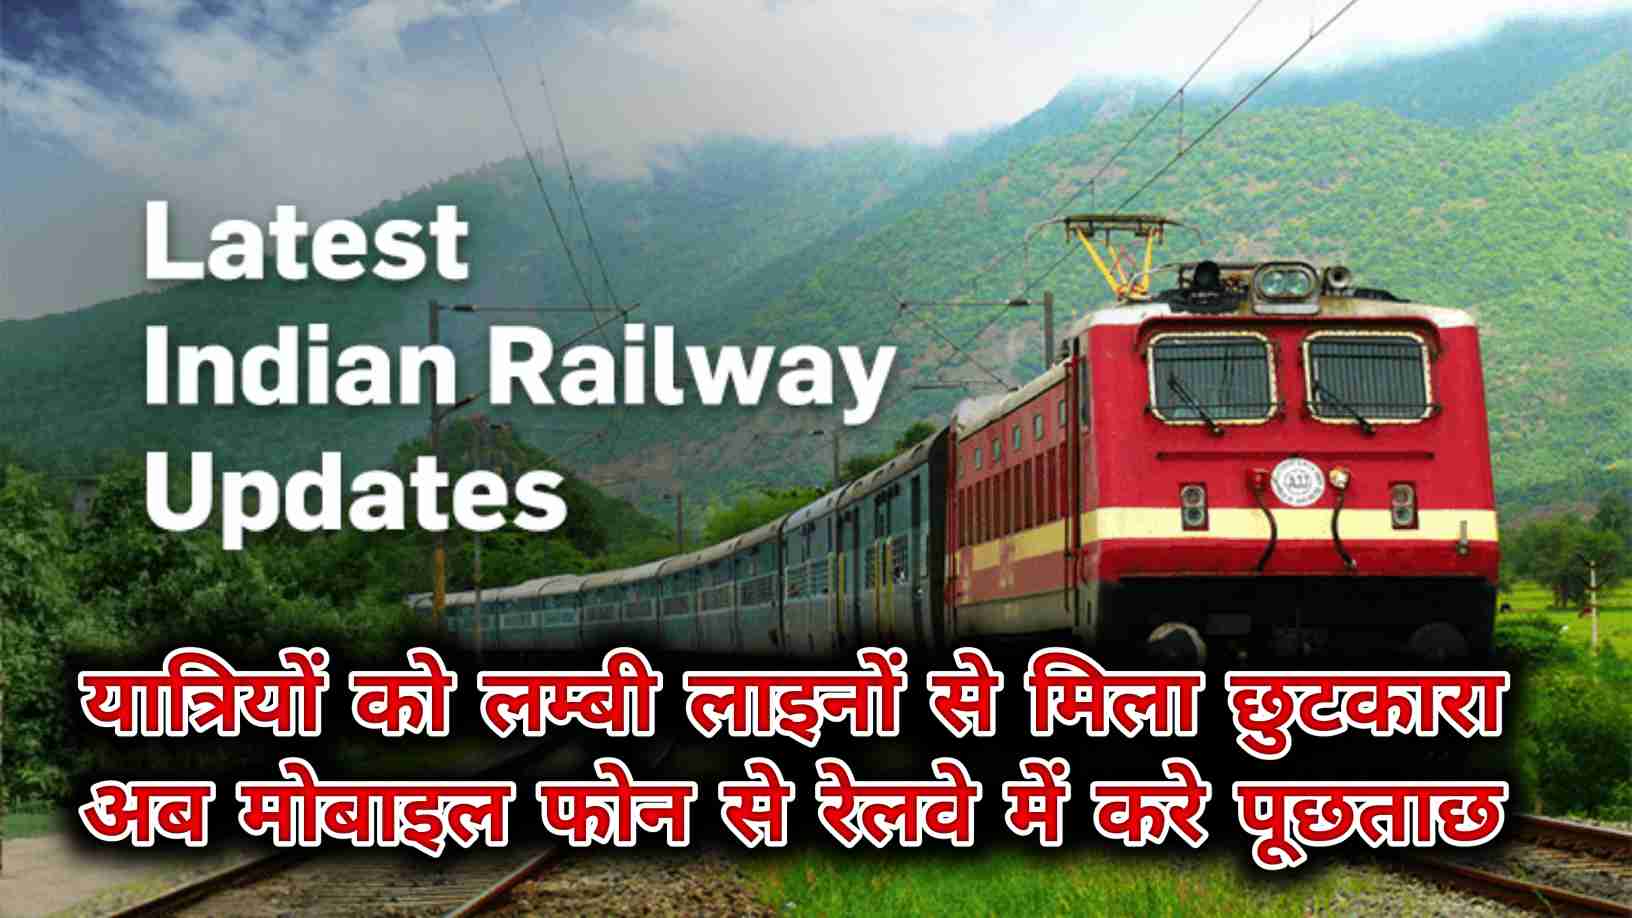 Indian Railways latest Service 139